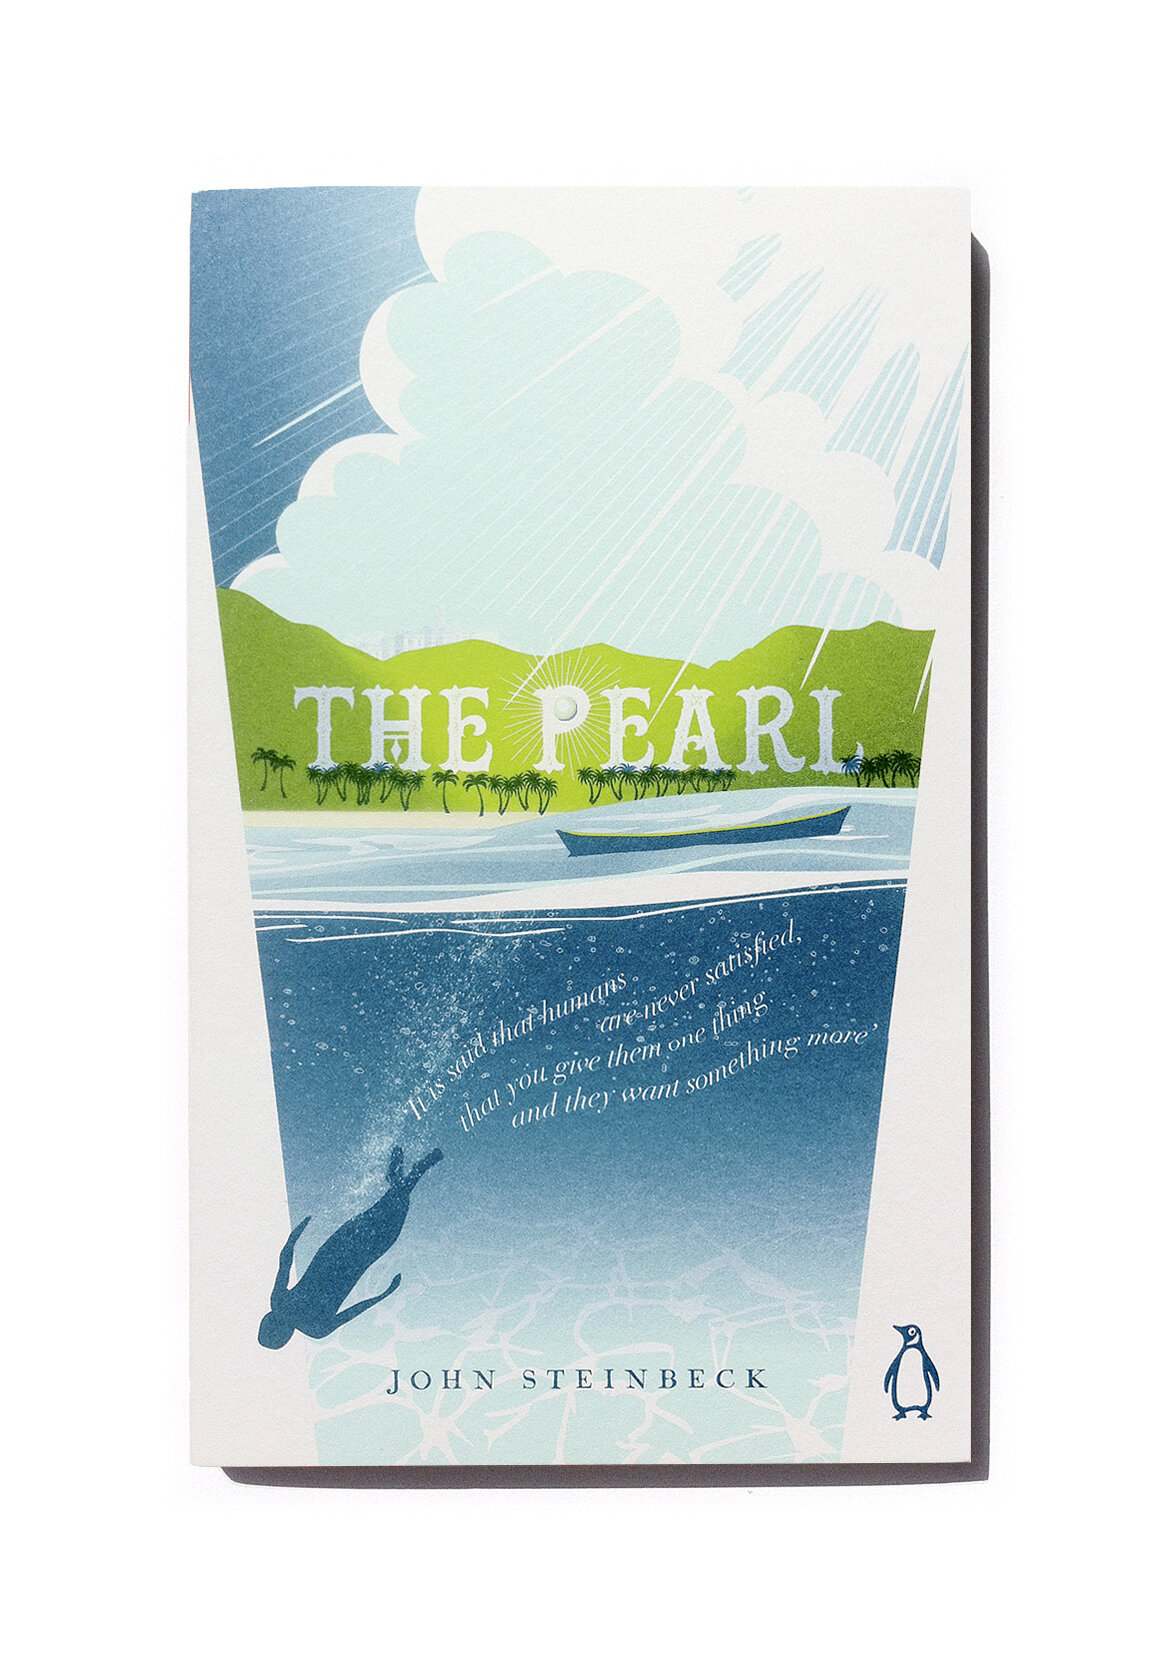  The Pearl - Design/illustration: Jim Stoddart 